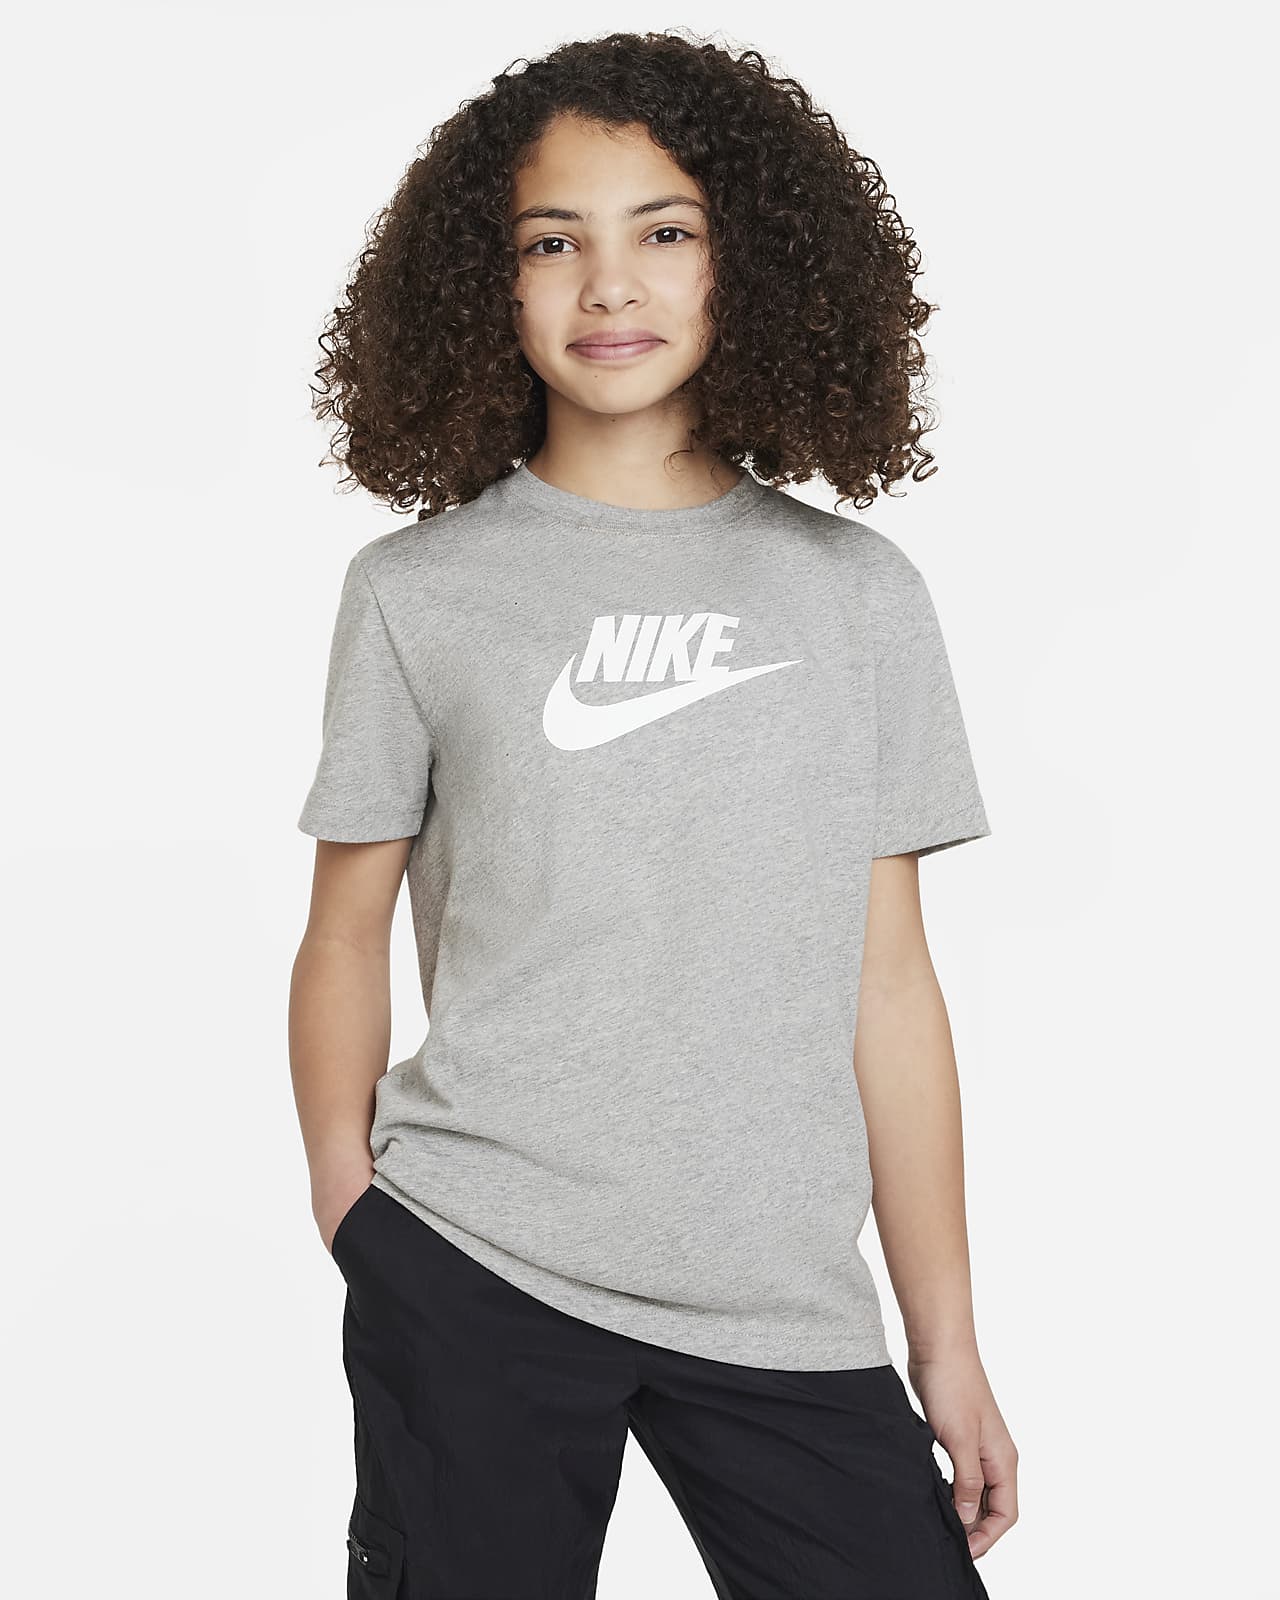 Nike Sportswear Kids' (Girls') T-Shirt. Nike.com